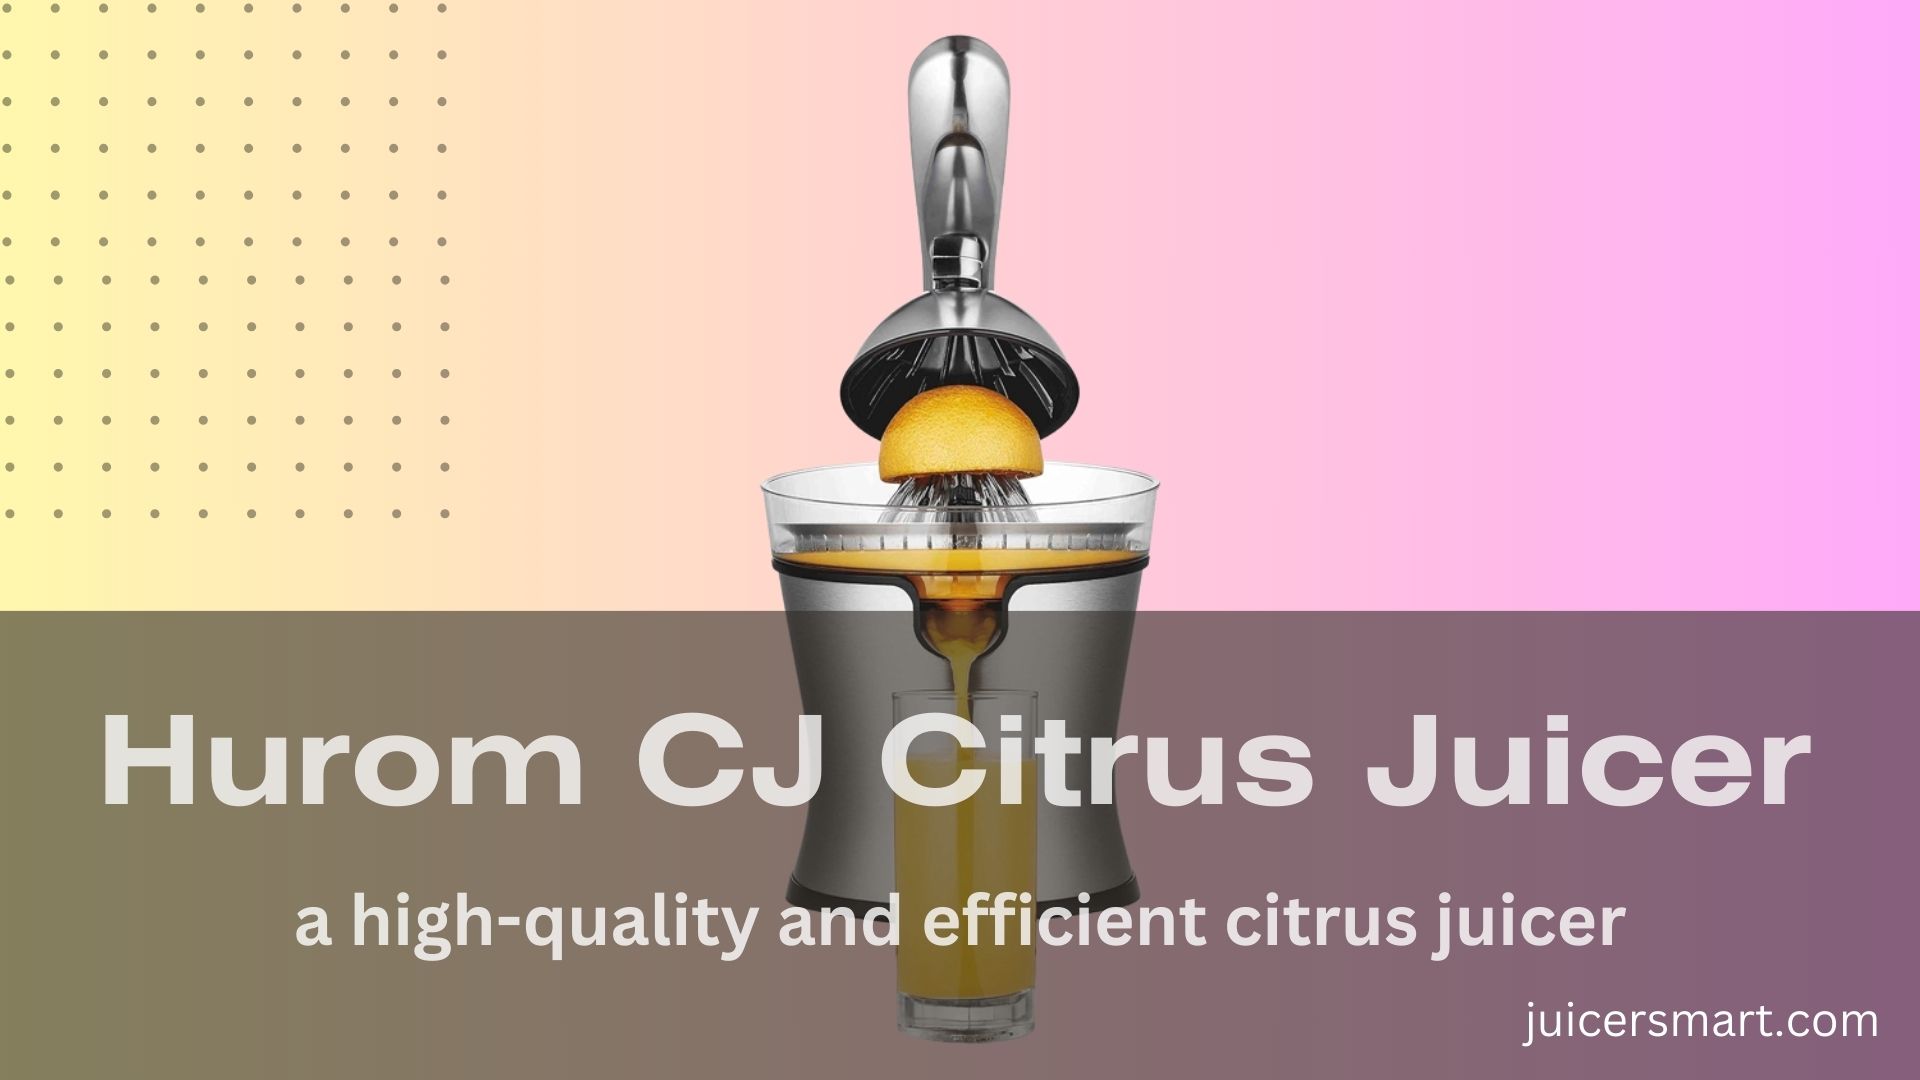 Hurom CJ Citrus Juicer